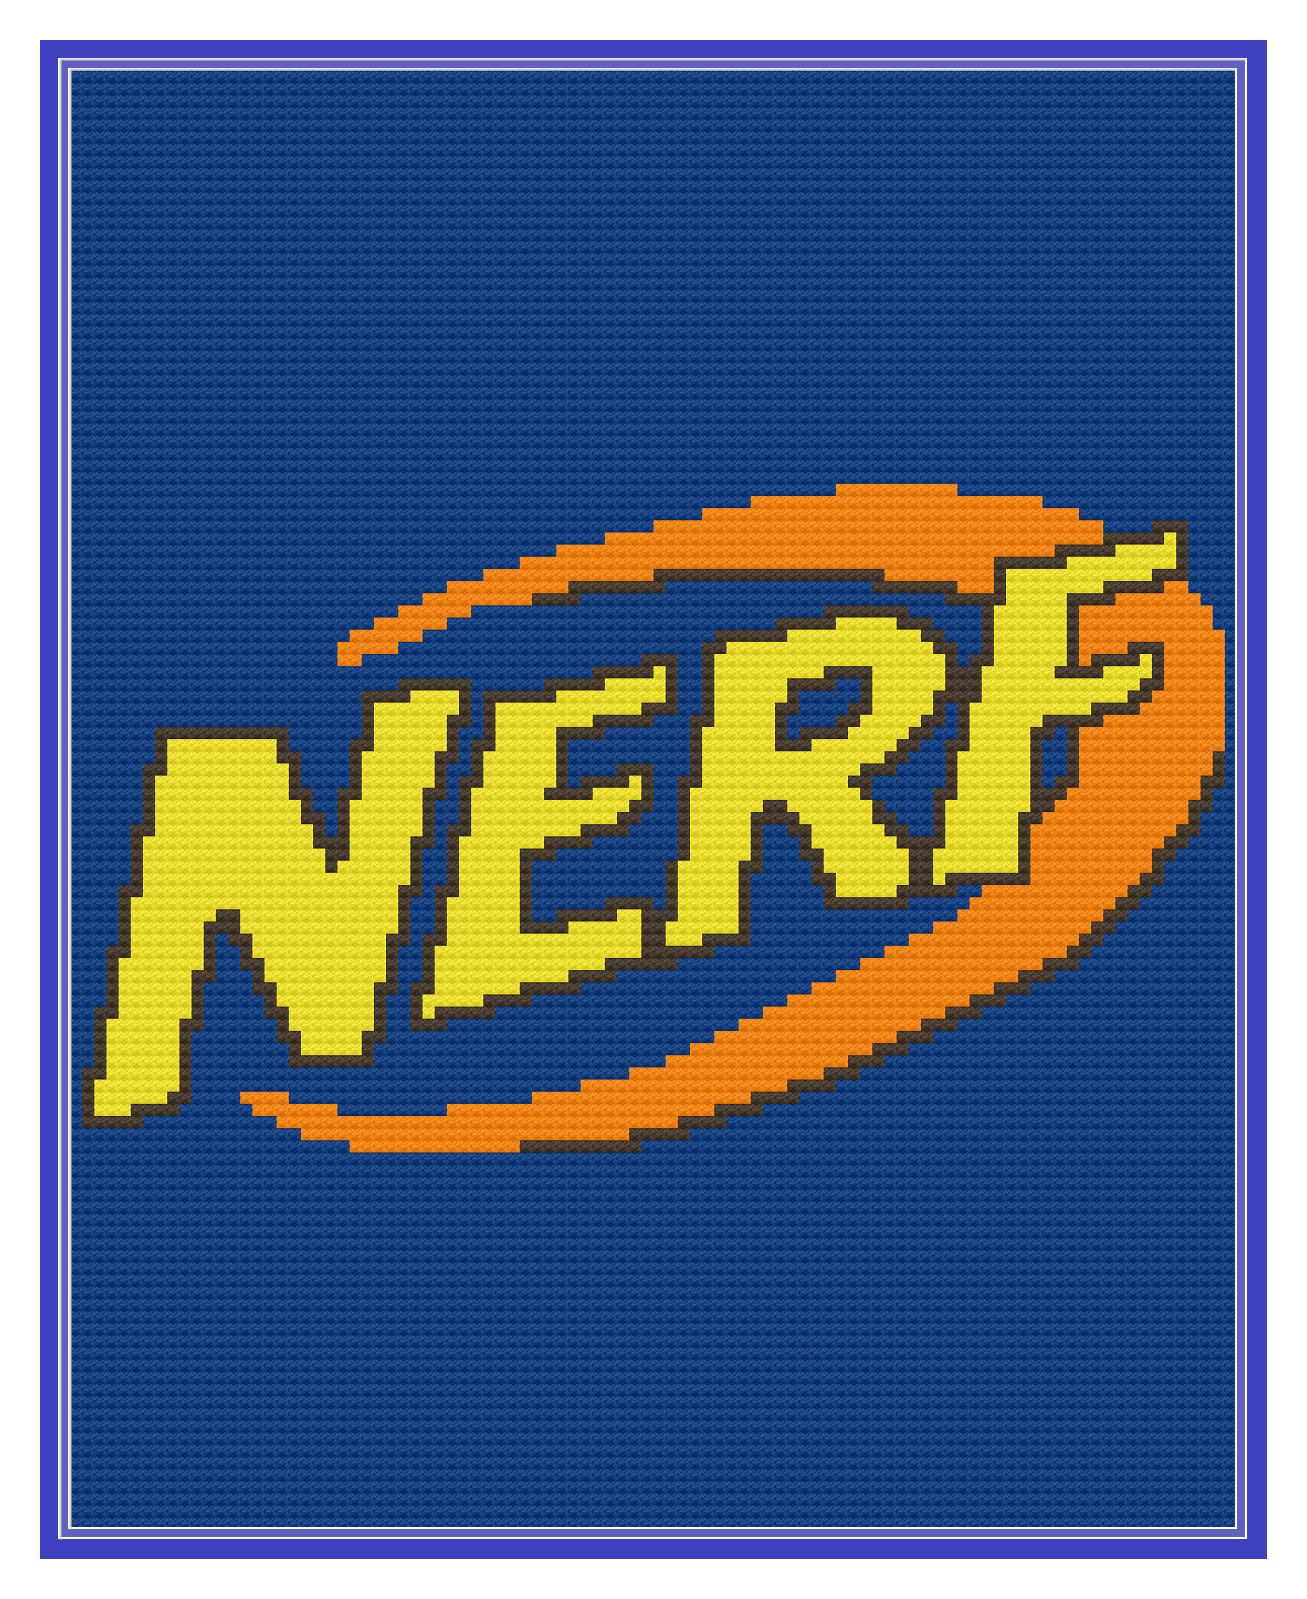 Nerf logo mini c2c 96x120 - Payhip